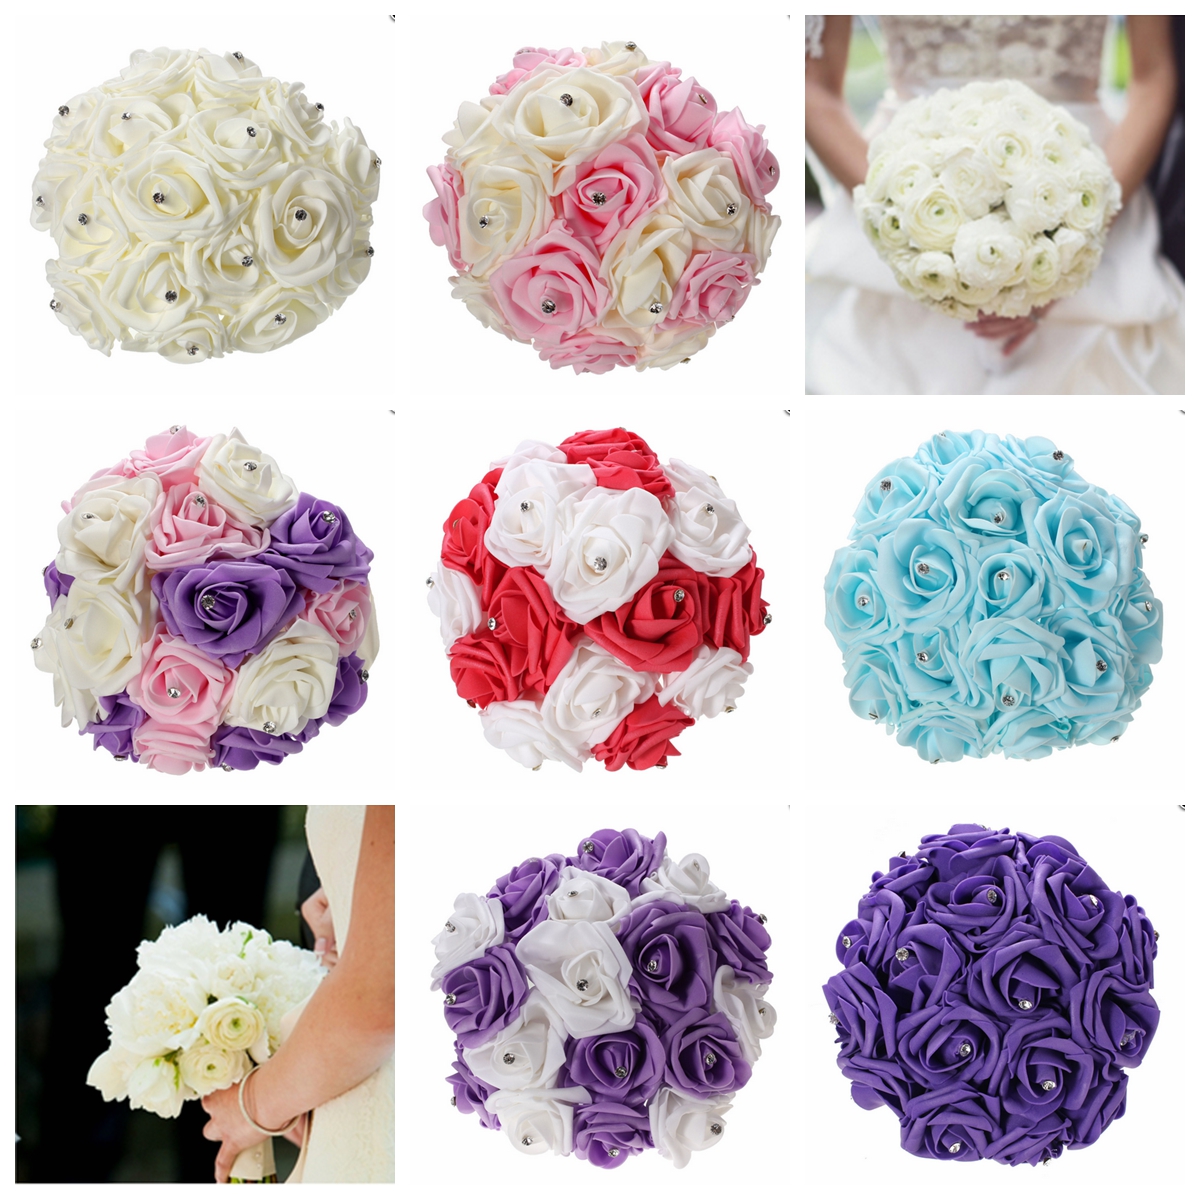 Crystal-Artificial-Foam-Rose-Flower-Bridesmaid-Bouquet-Bridal-Wedding-Decorations-1013494-1